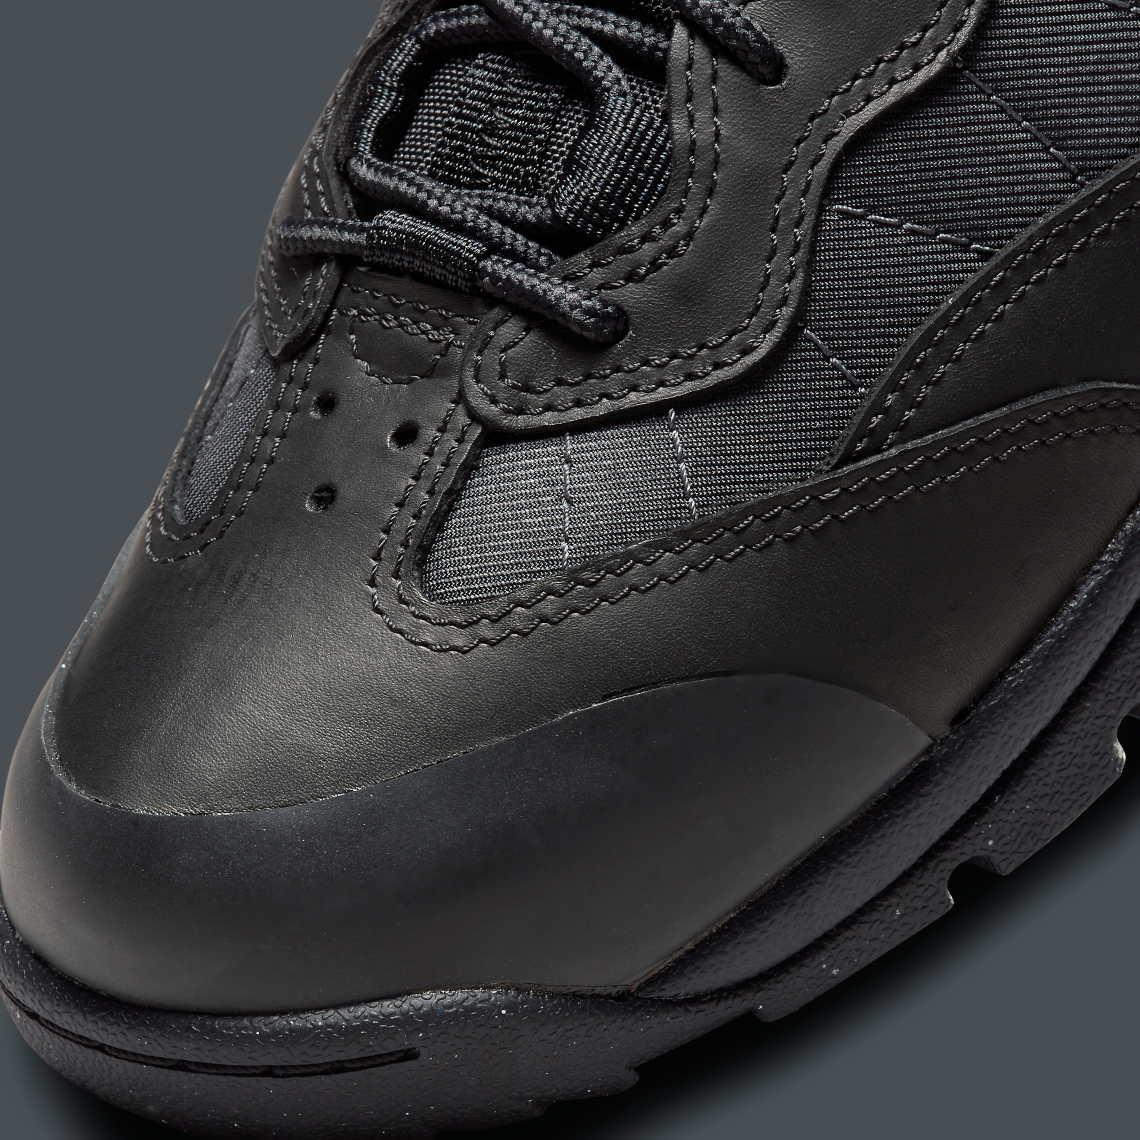 Nike ACG Air Mada Low PRM "Black" DM3004-002 | SneakerNews.com